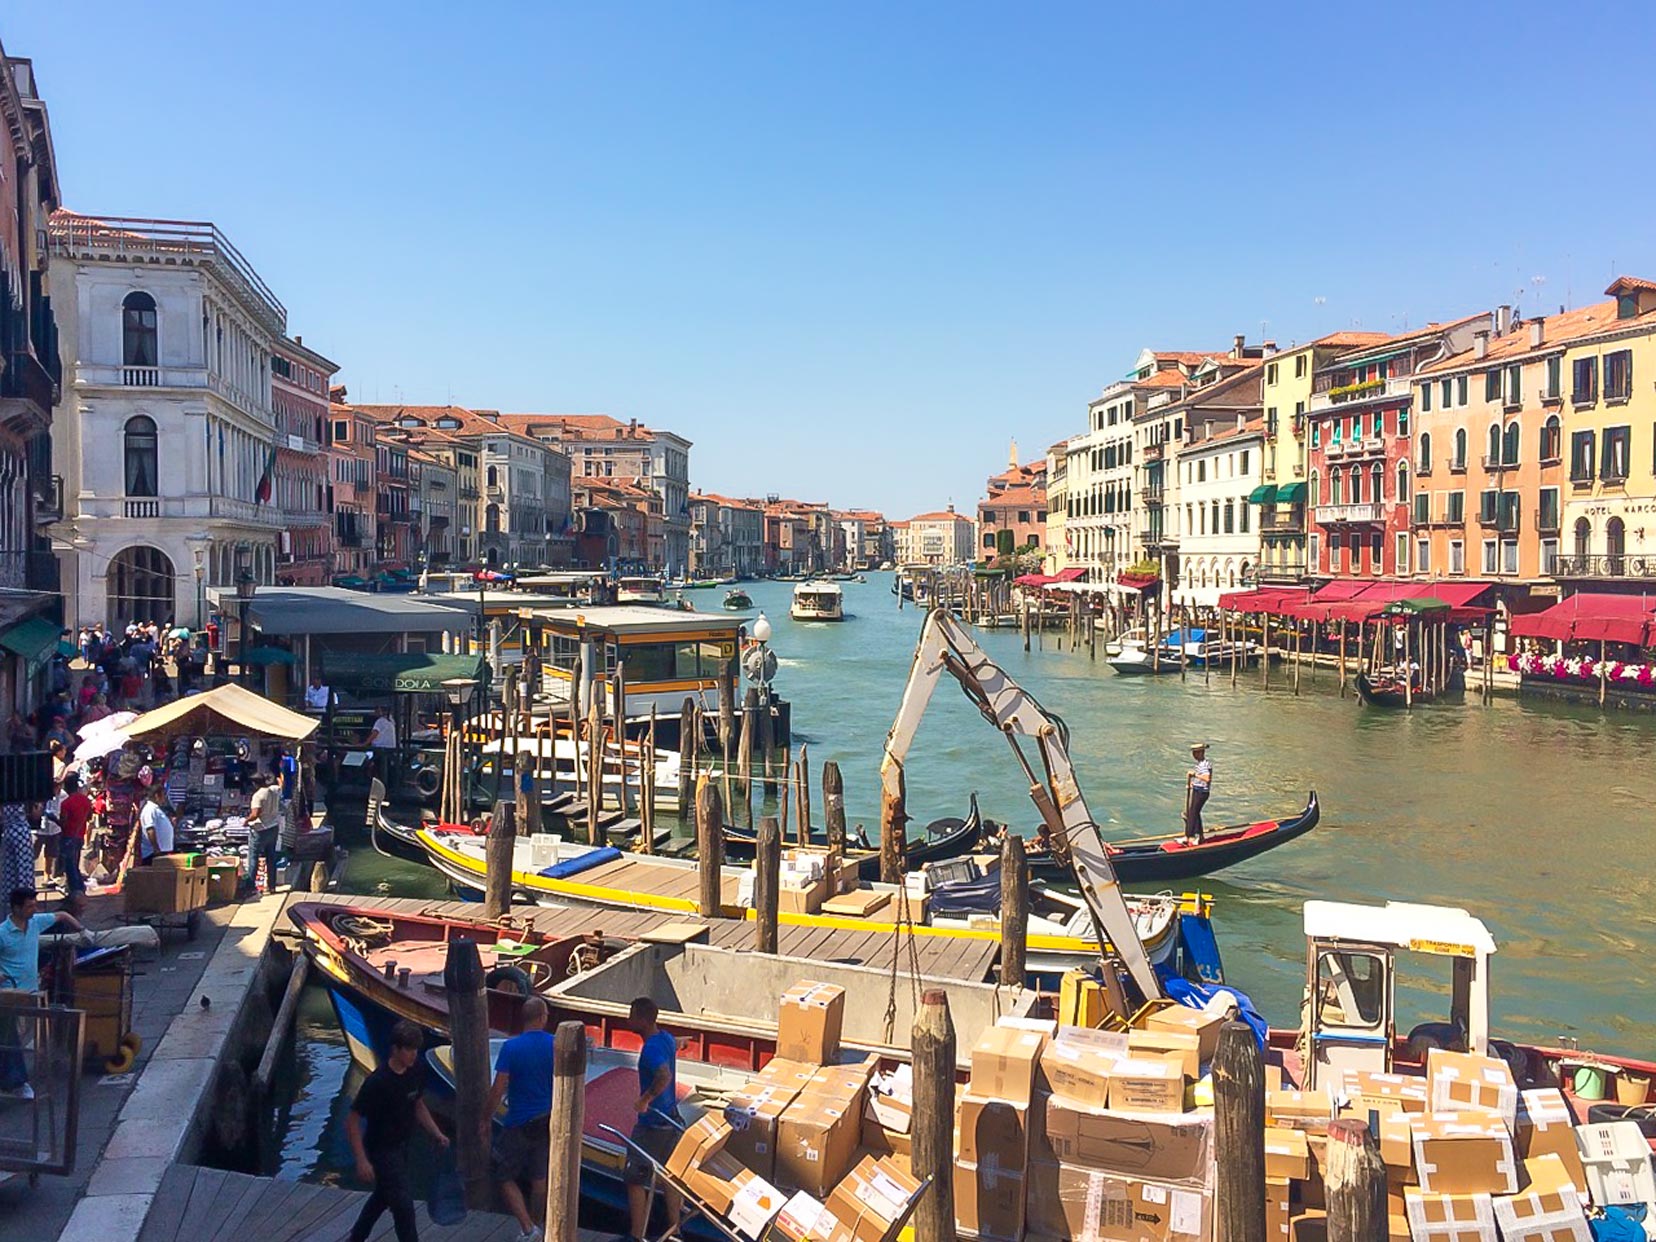 Venice's main canal